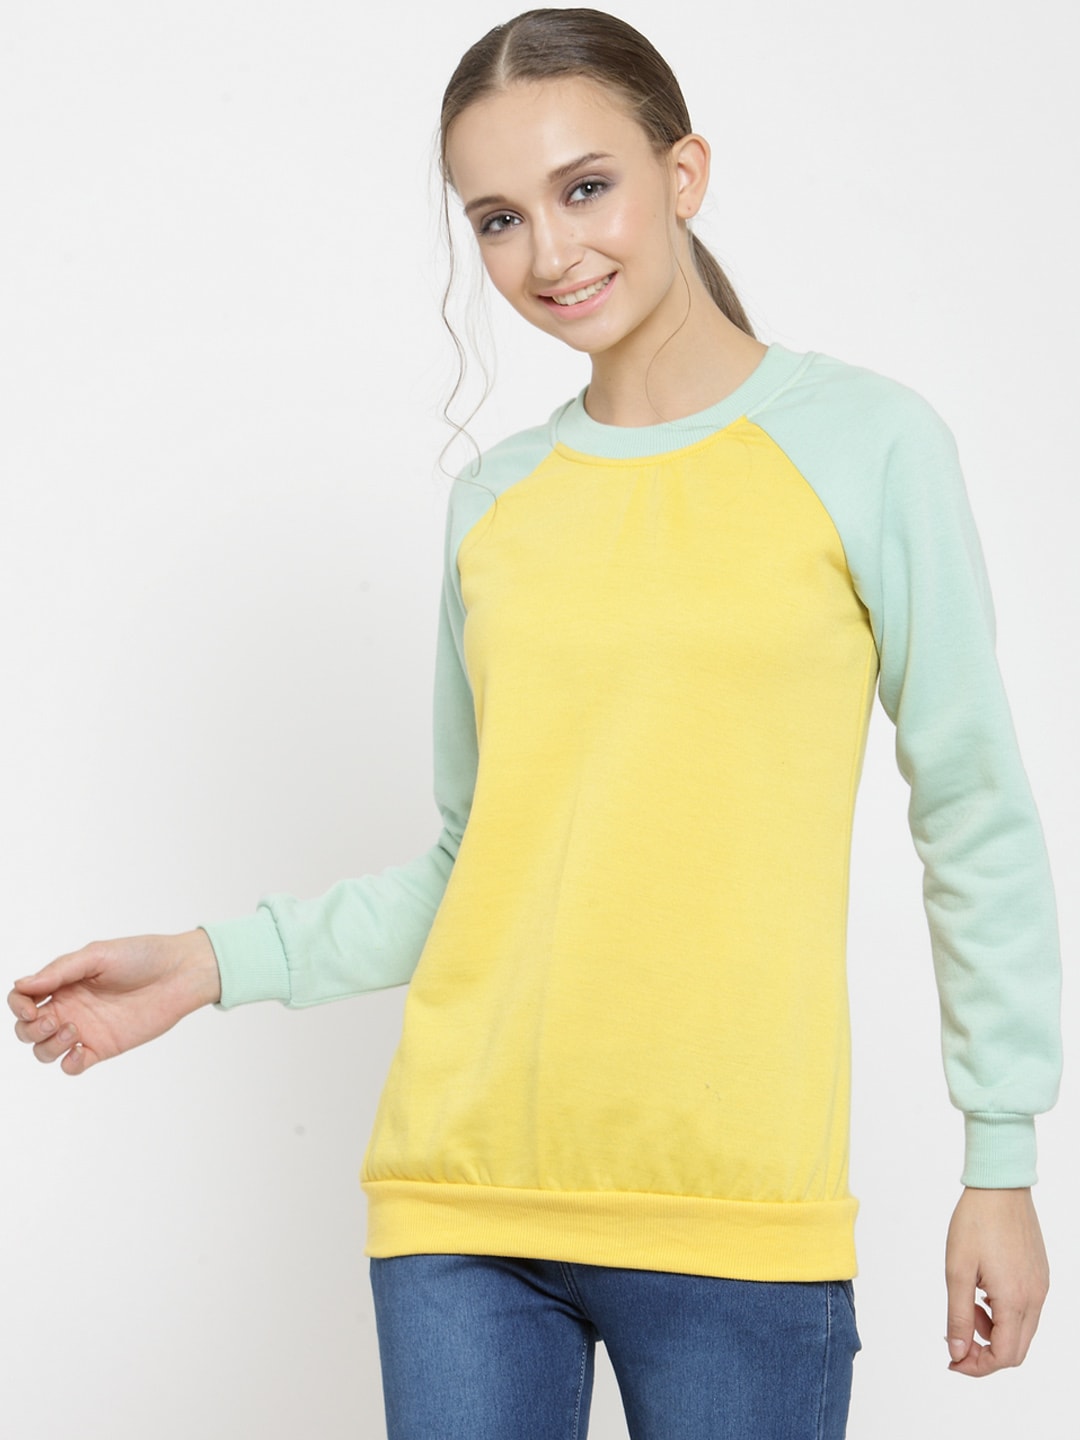 Belle Fille Women Yellow & Sea Green Colourblocked Sweatshirt Price in India